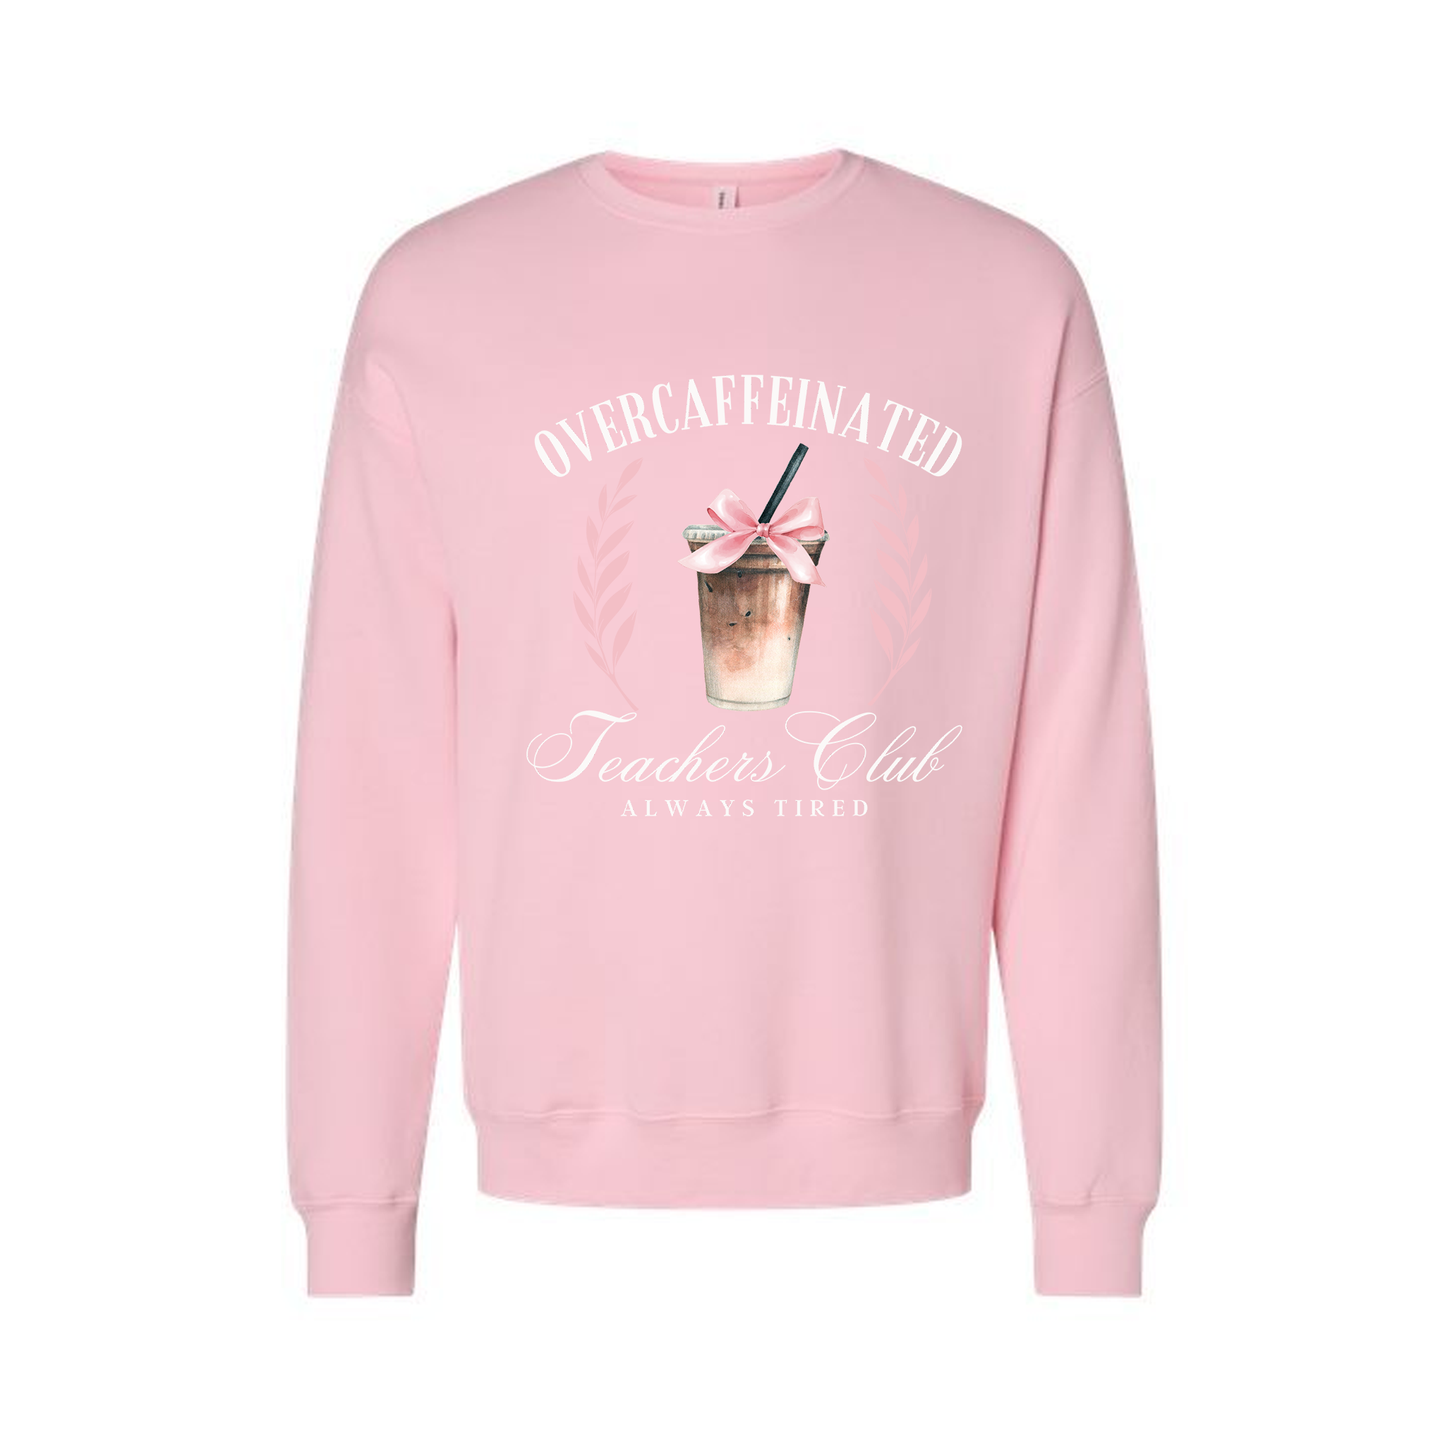 Overcaffeinated Teacher's Club - Sweatshirt (Light Pink)